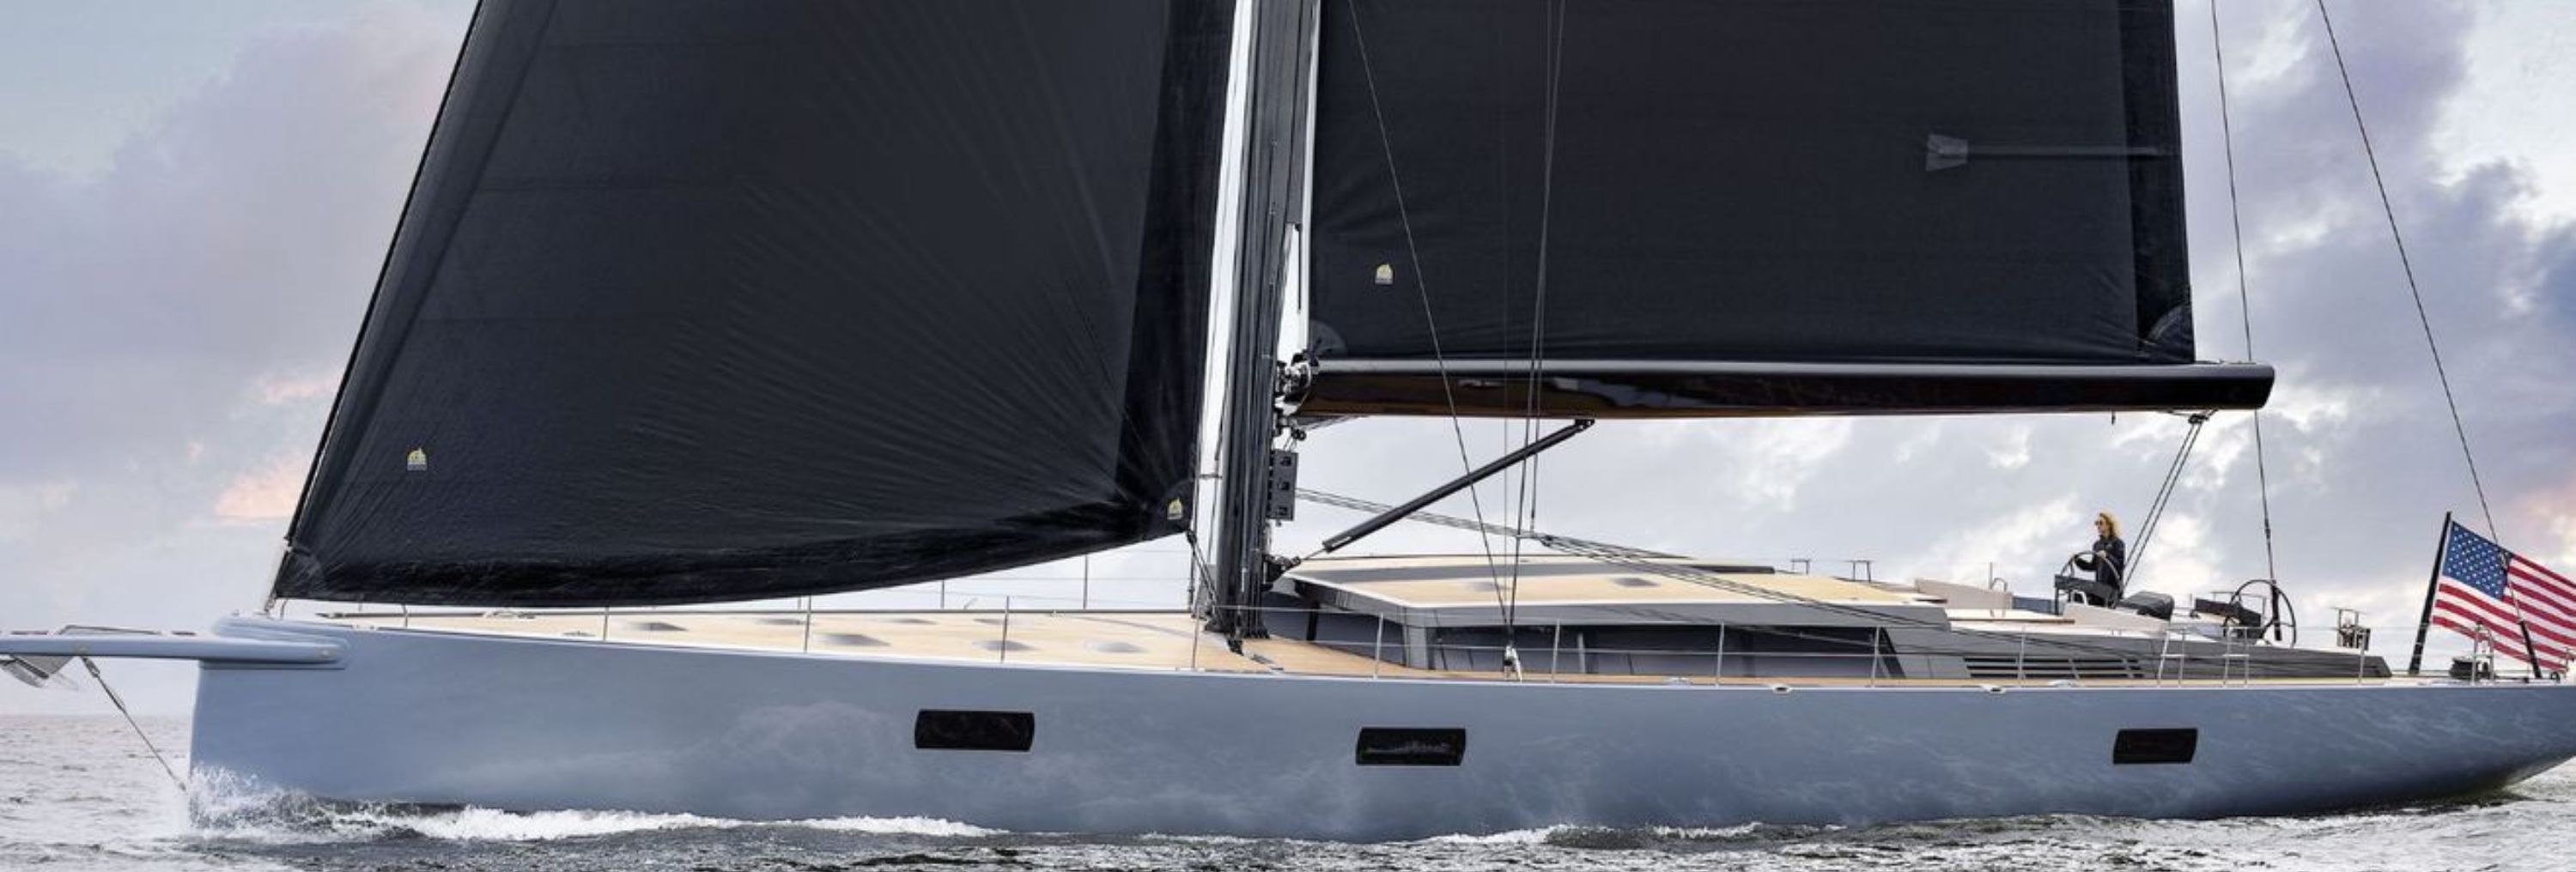 YCustom : New Yacht for Sale